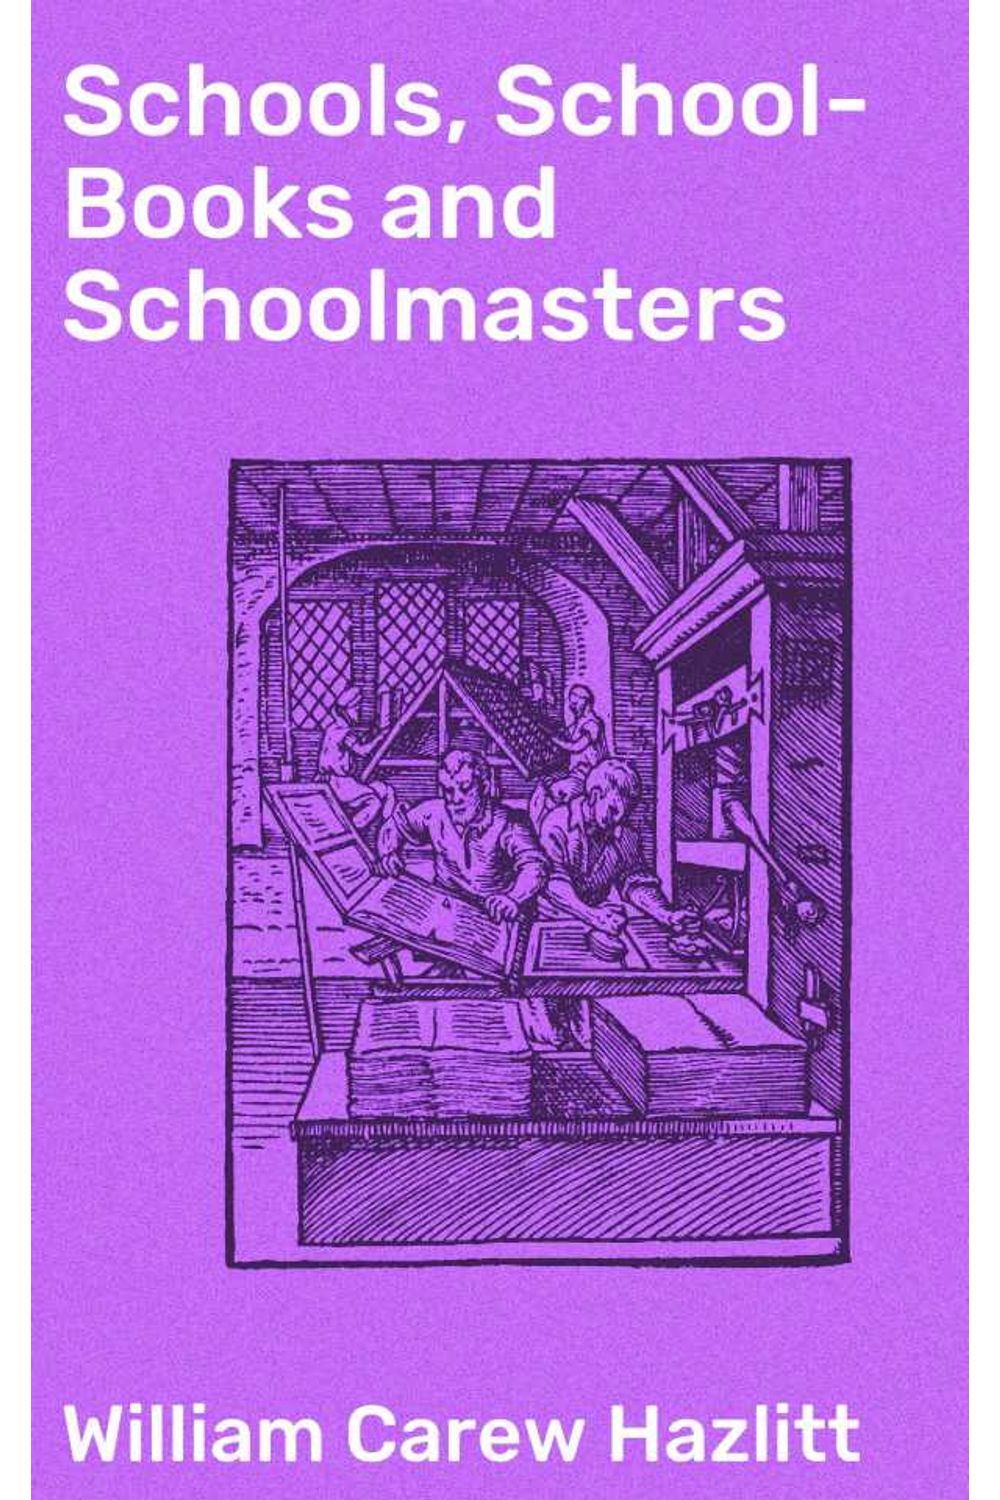 bw-schools-schoolbooks-and-schoolmasters-good-press-4064066220211